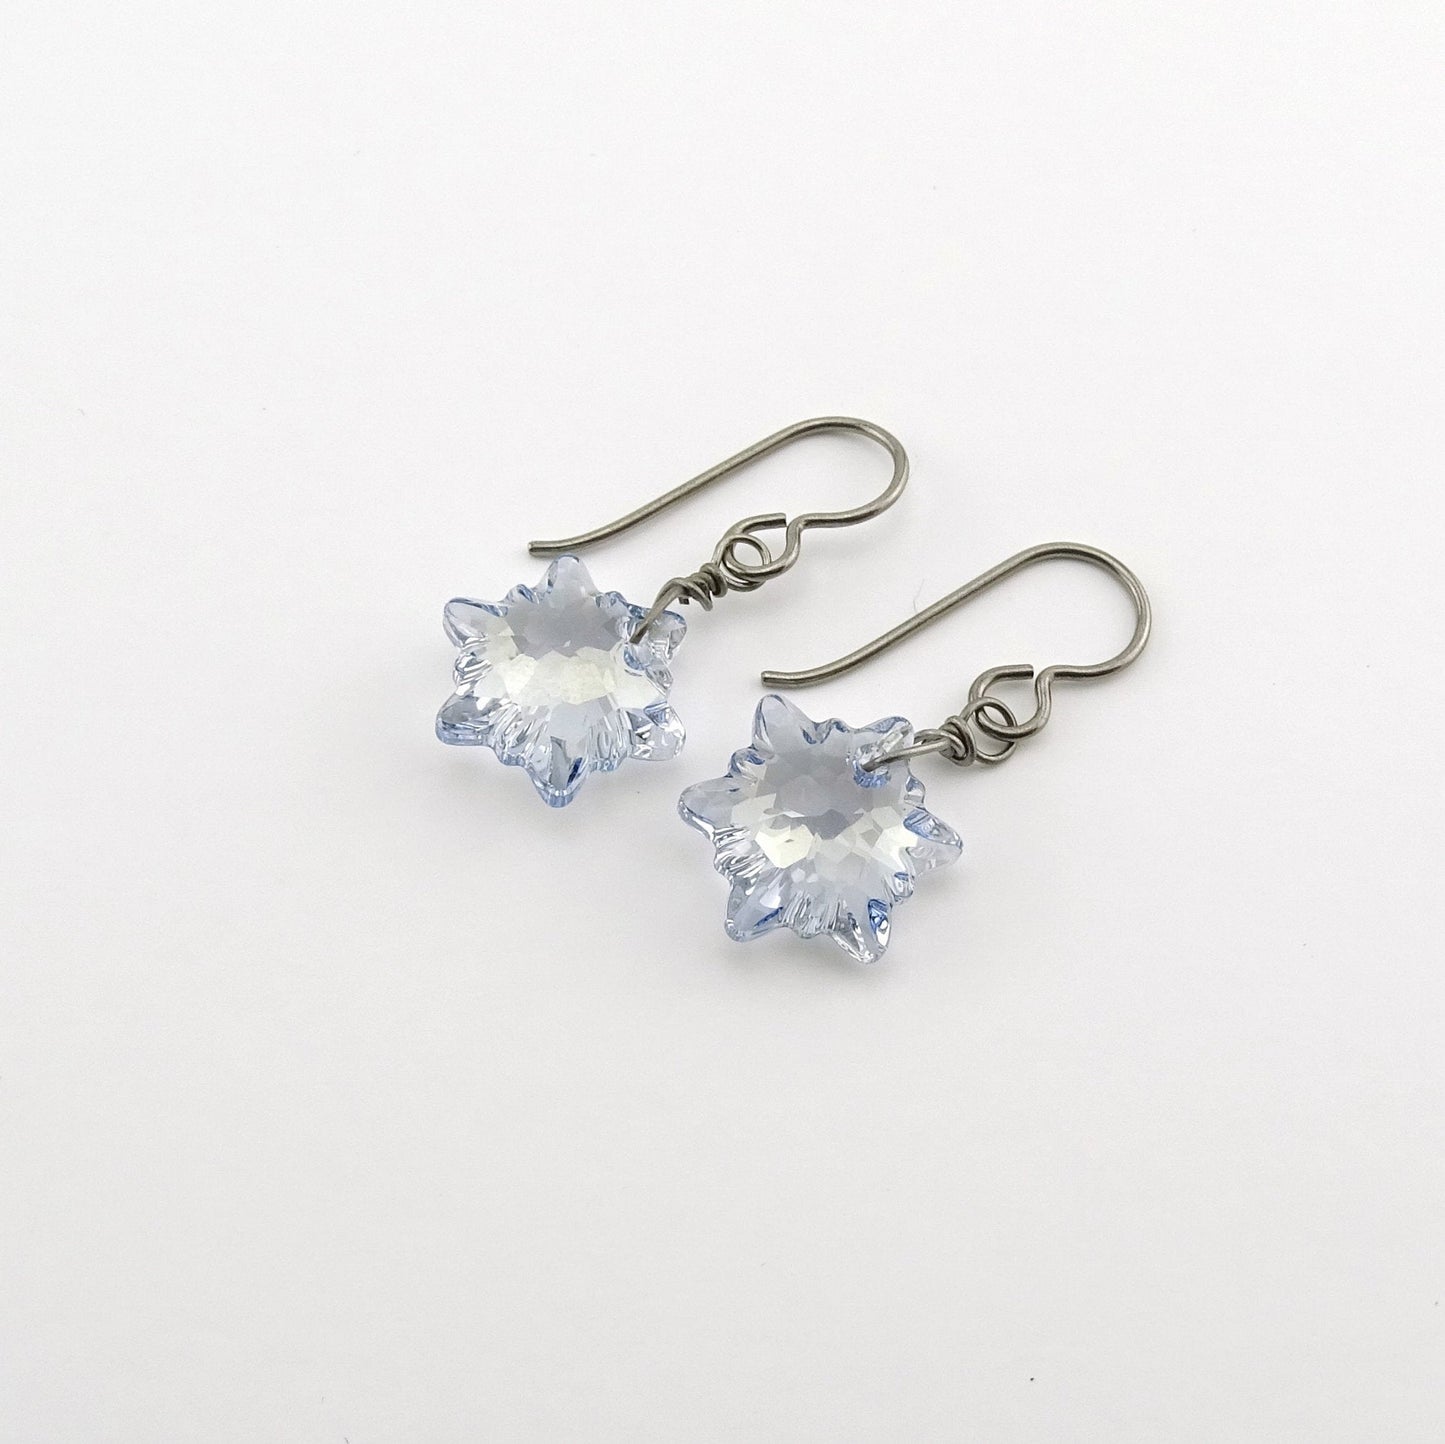 Blue Shade Edelweiss Titanium Earrings, Pale Blue Swarovski Crystal Niobium Earrings, Hypoallergenic Nickel Free Earrings for Sensitive Ears